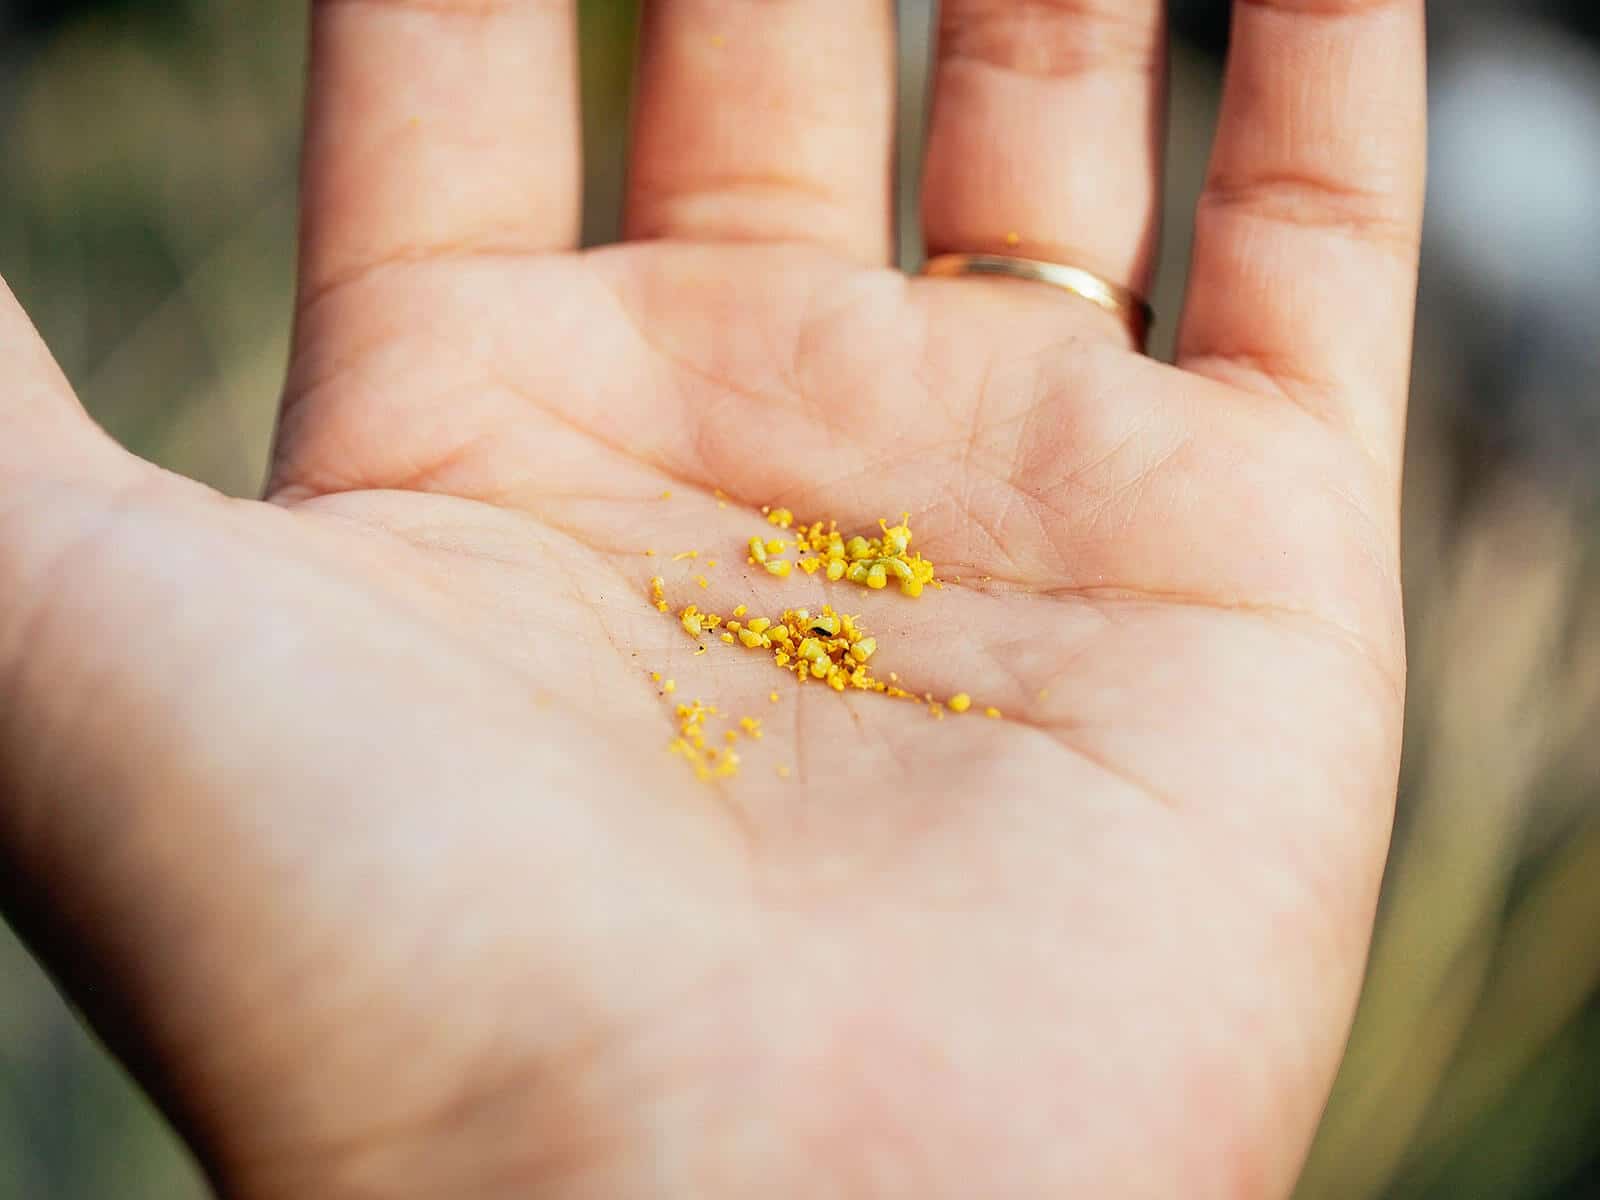 Open hand with grains of wild fennel pollen in palm